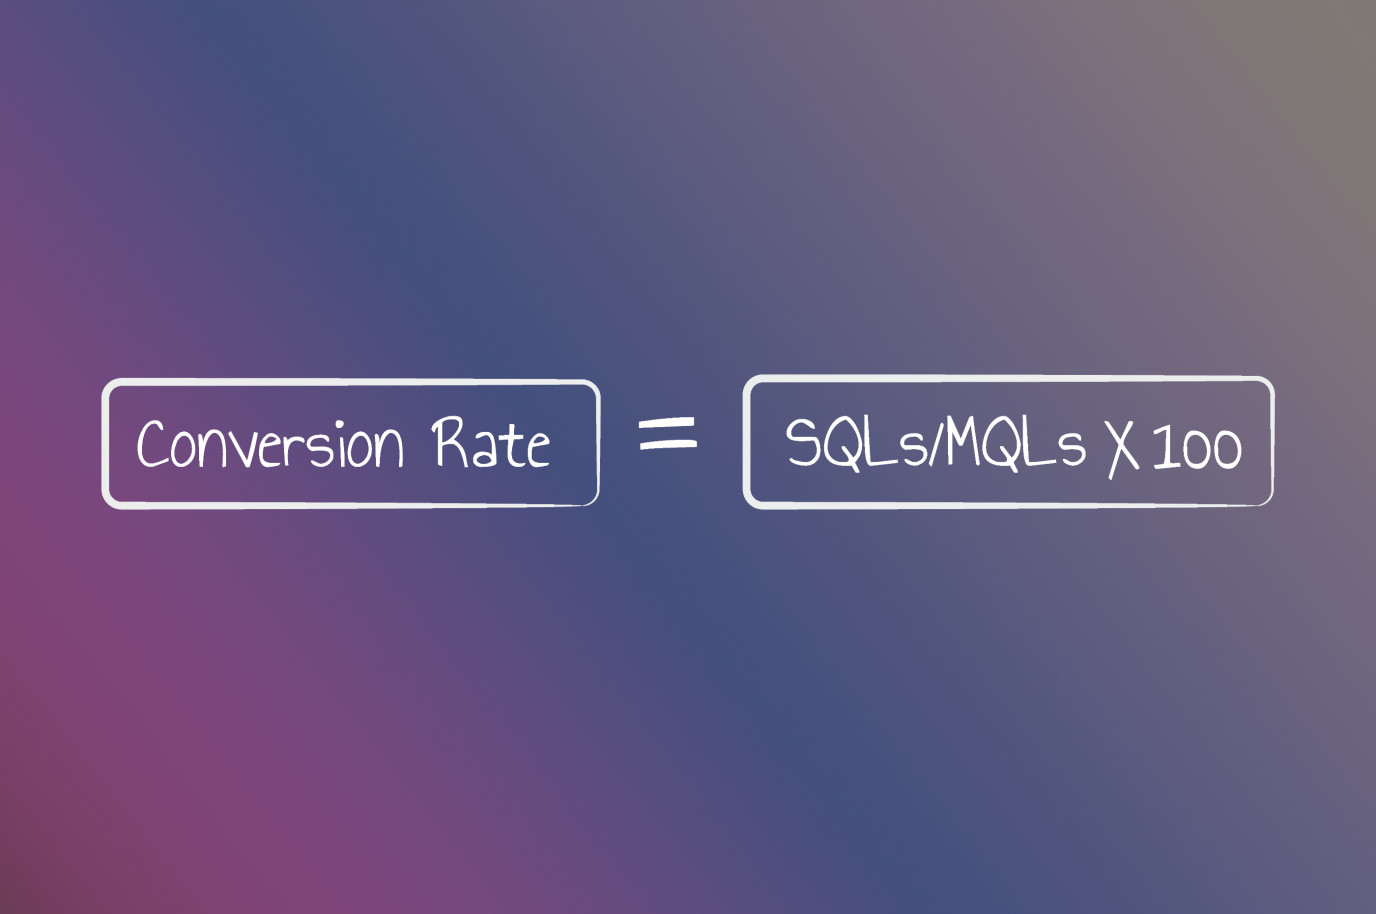 MQL and SQL conversion rate formula